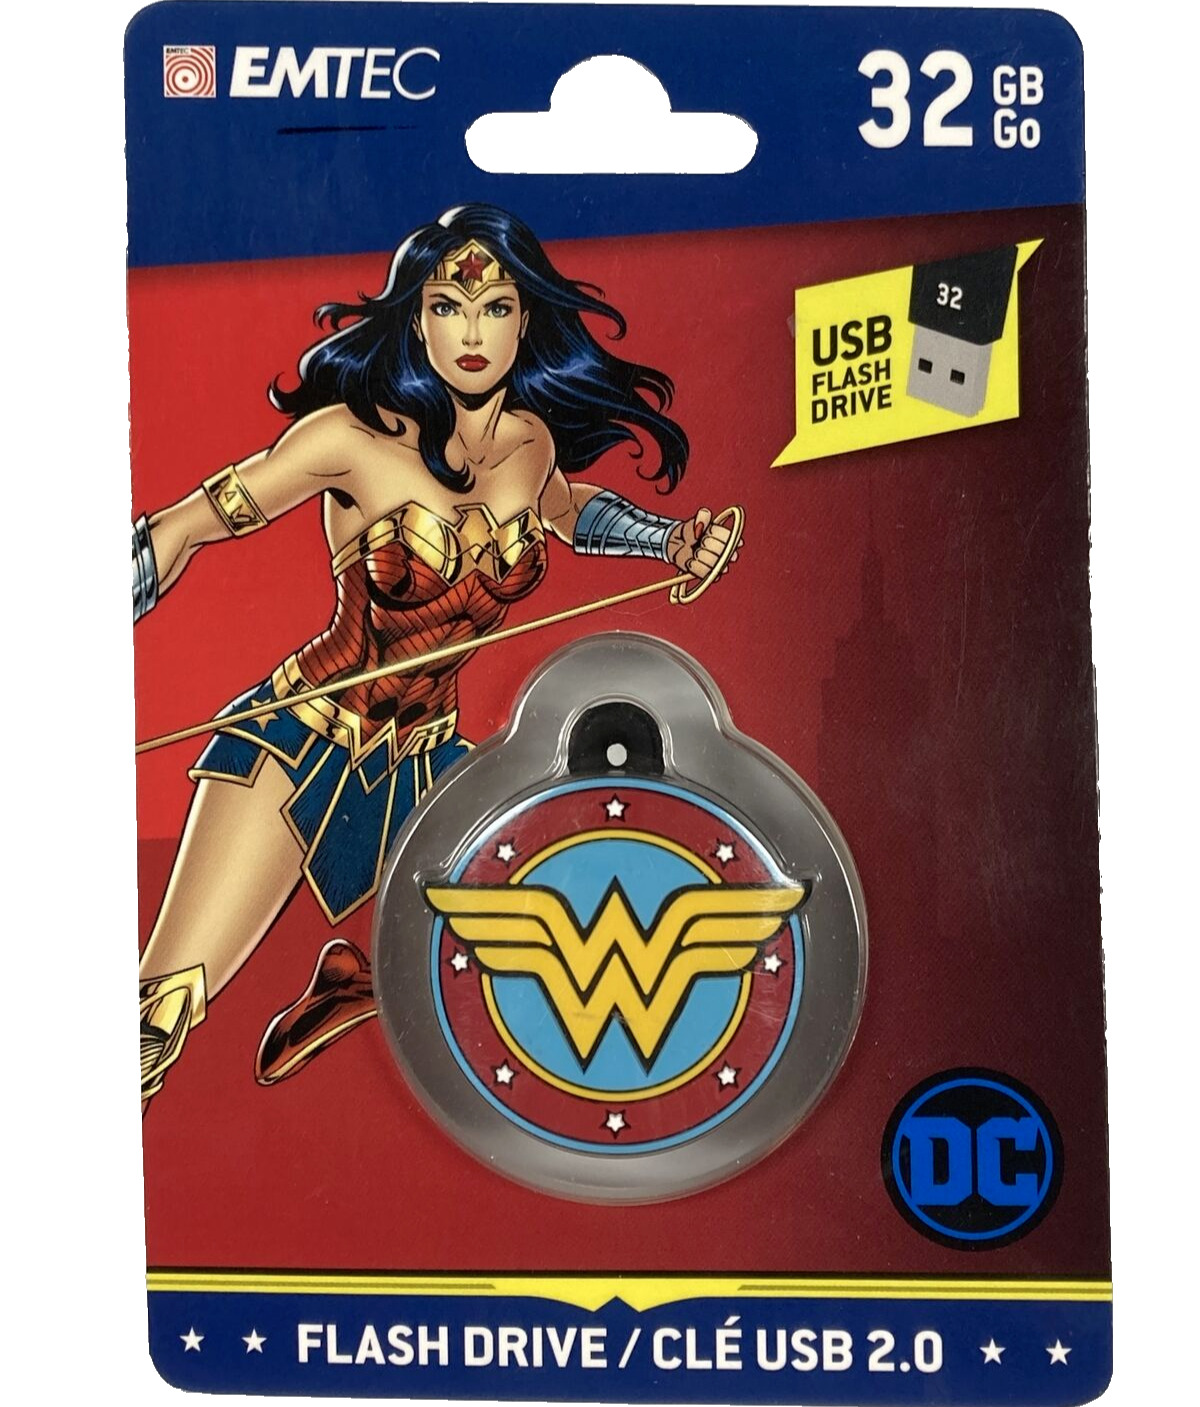 Emtec Wonder Woman USB 32 GB Flash Drive Keychain